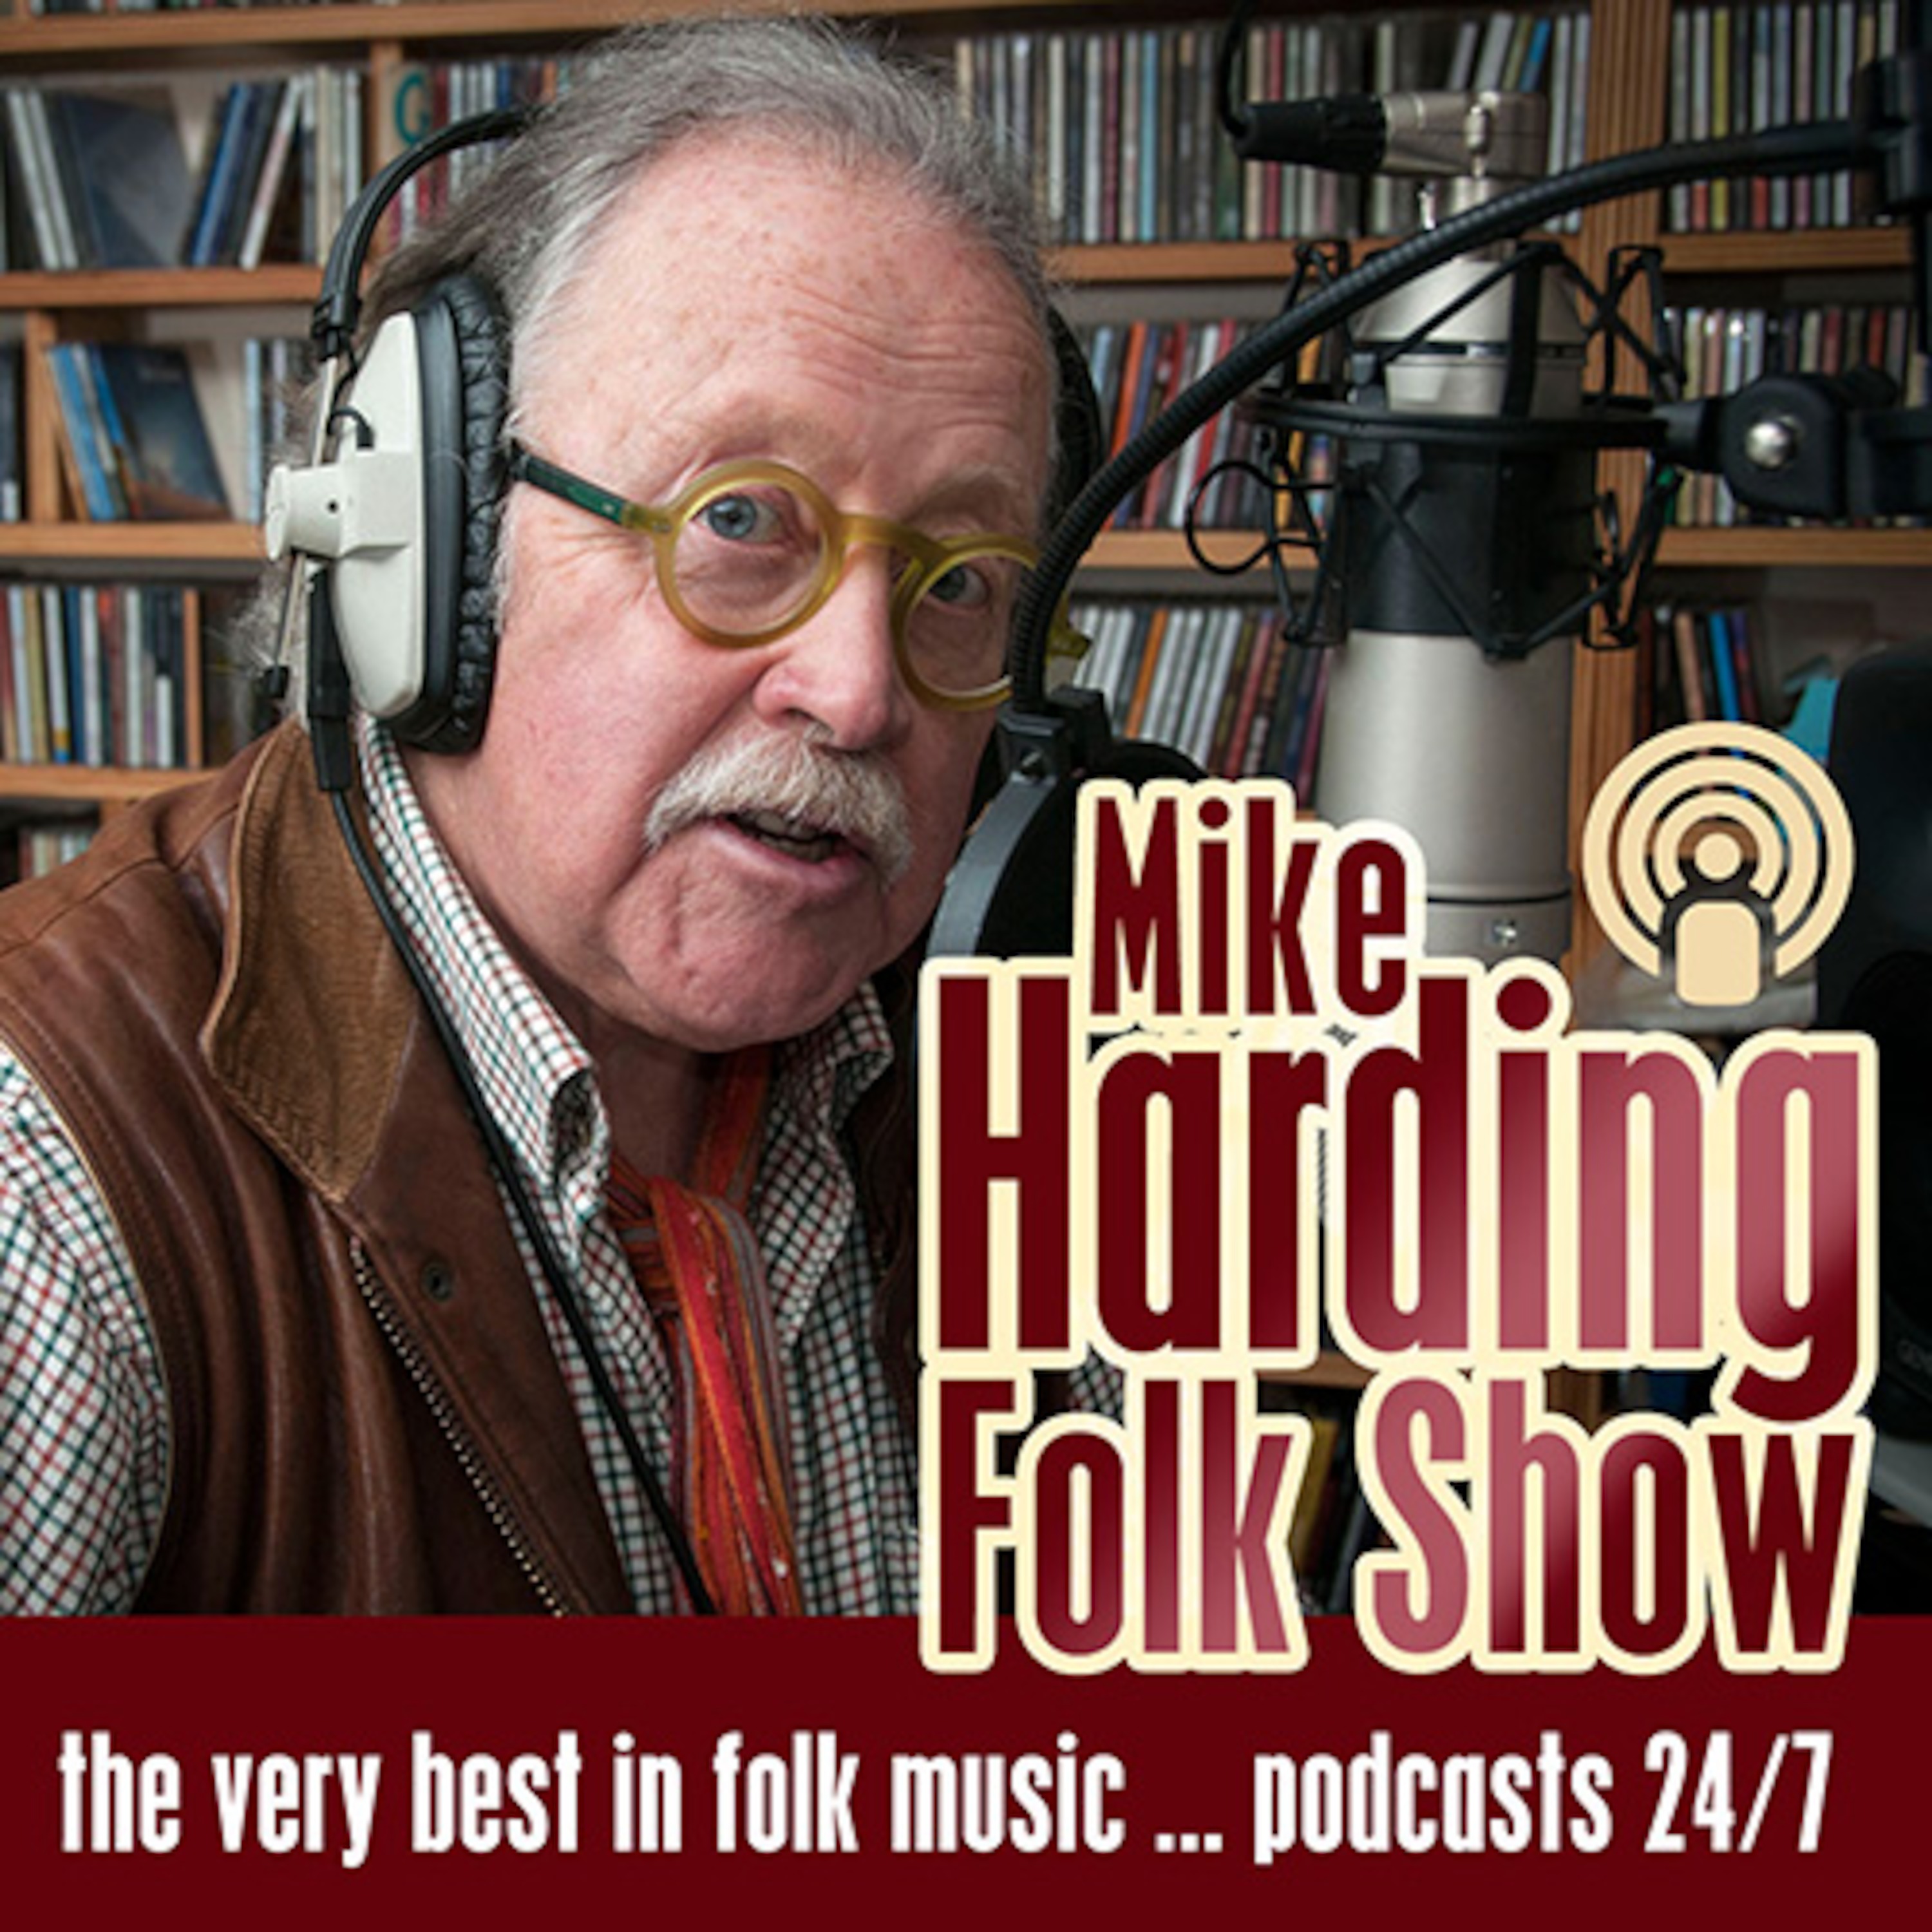 Mike Harding Folk Show 150